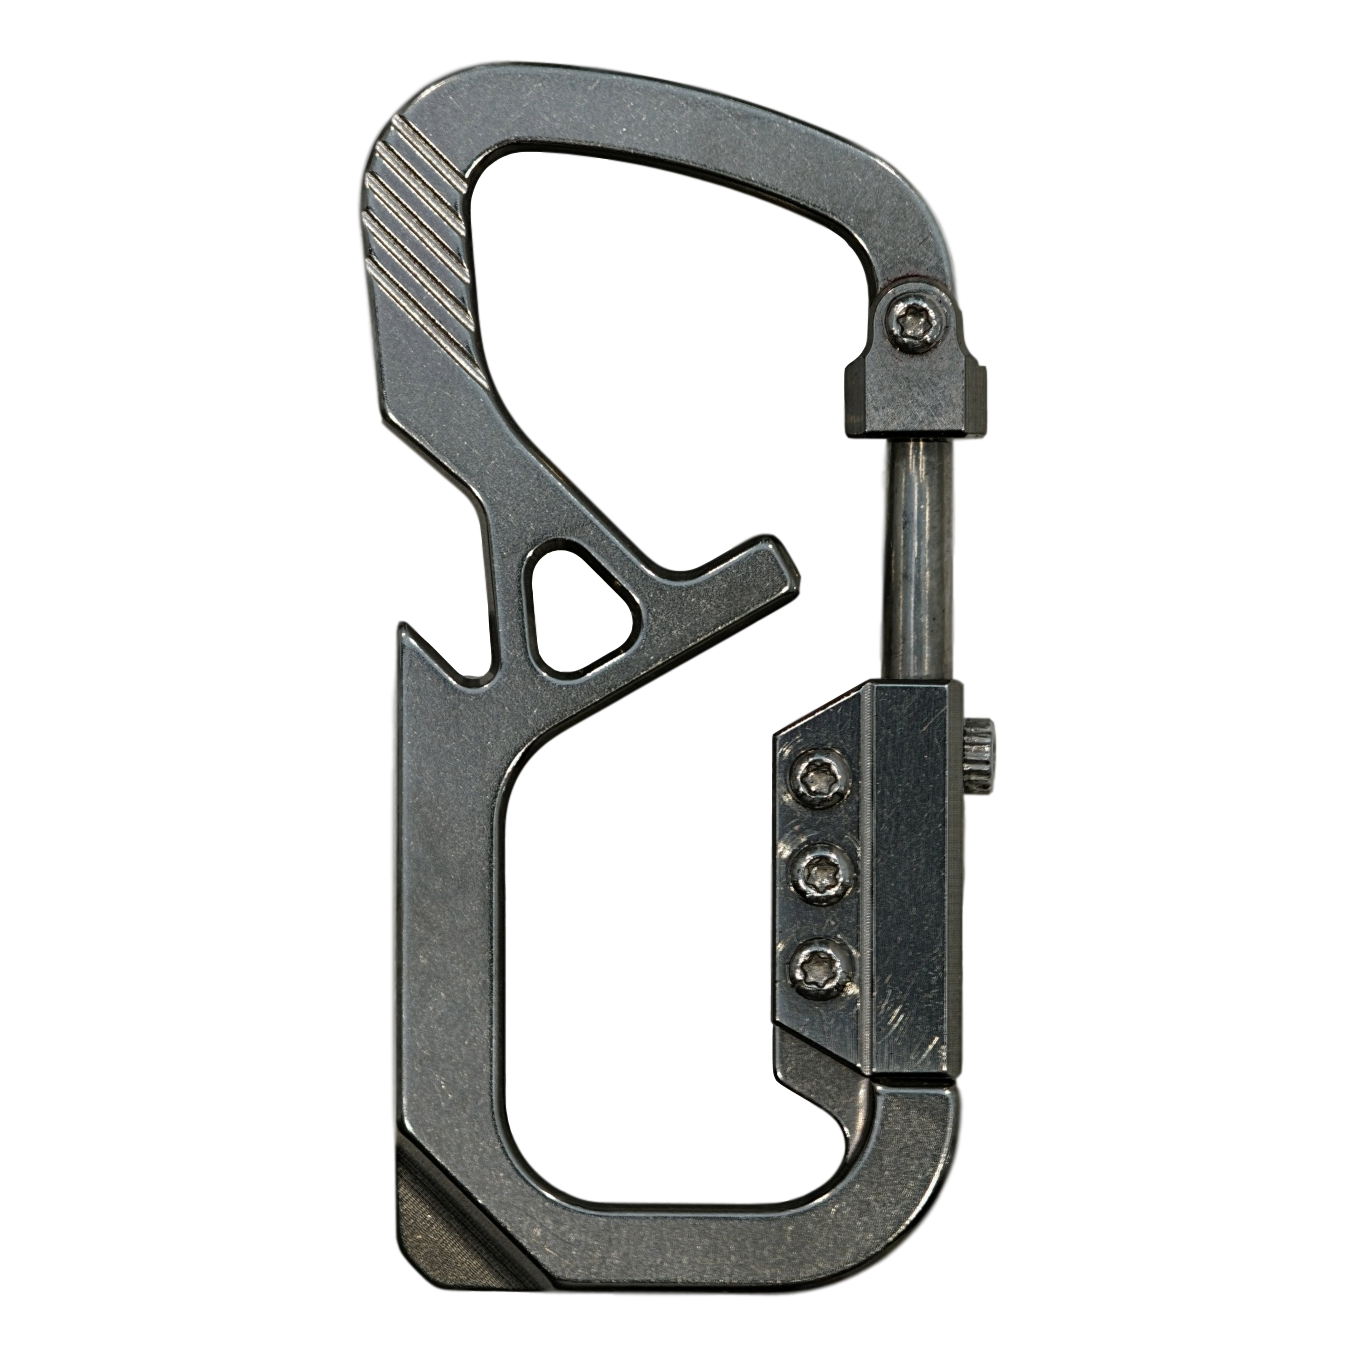 Carabiner Keychain